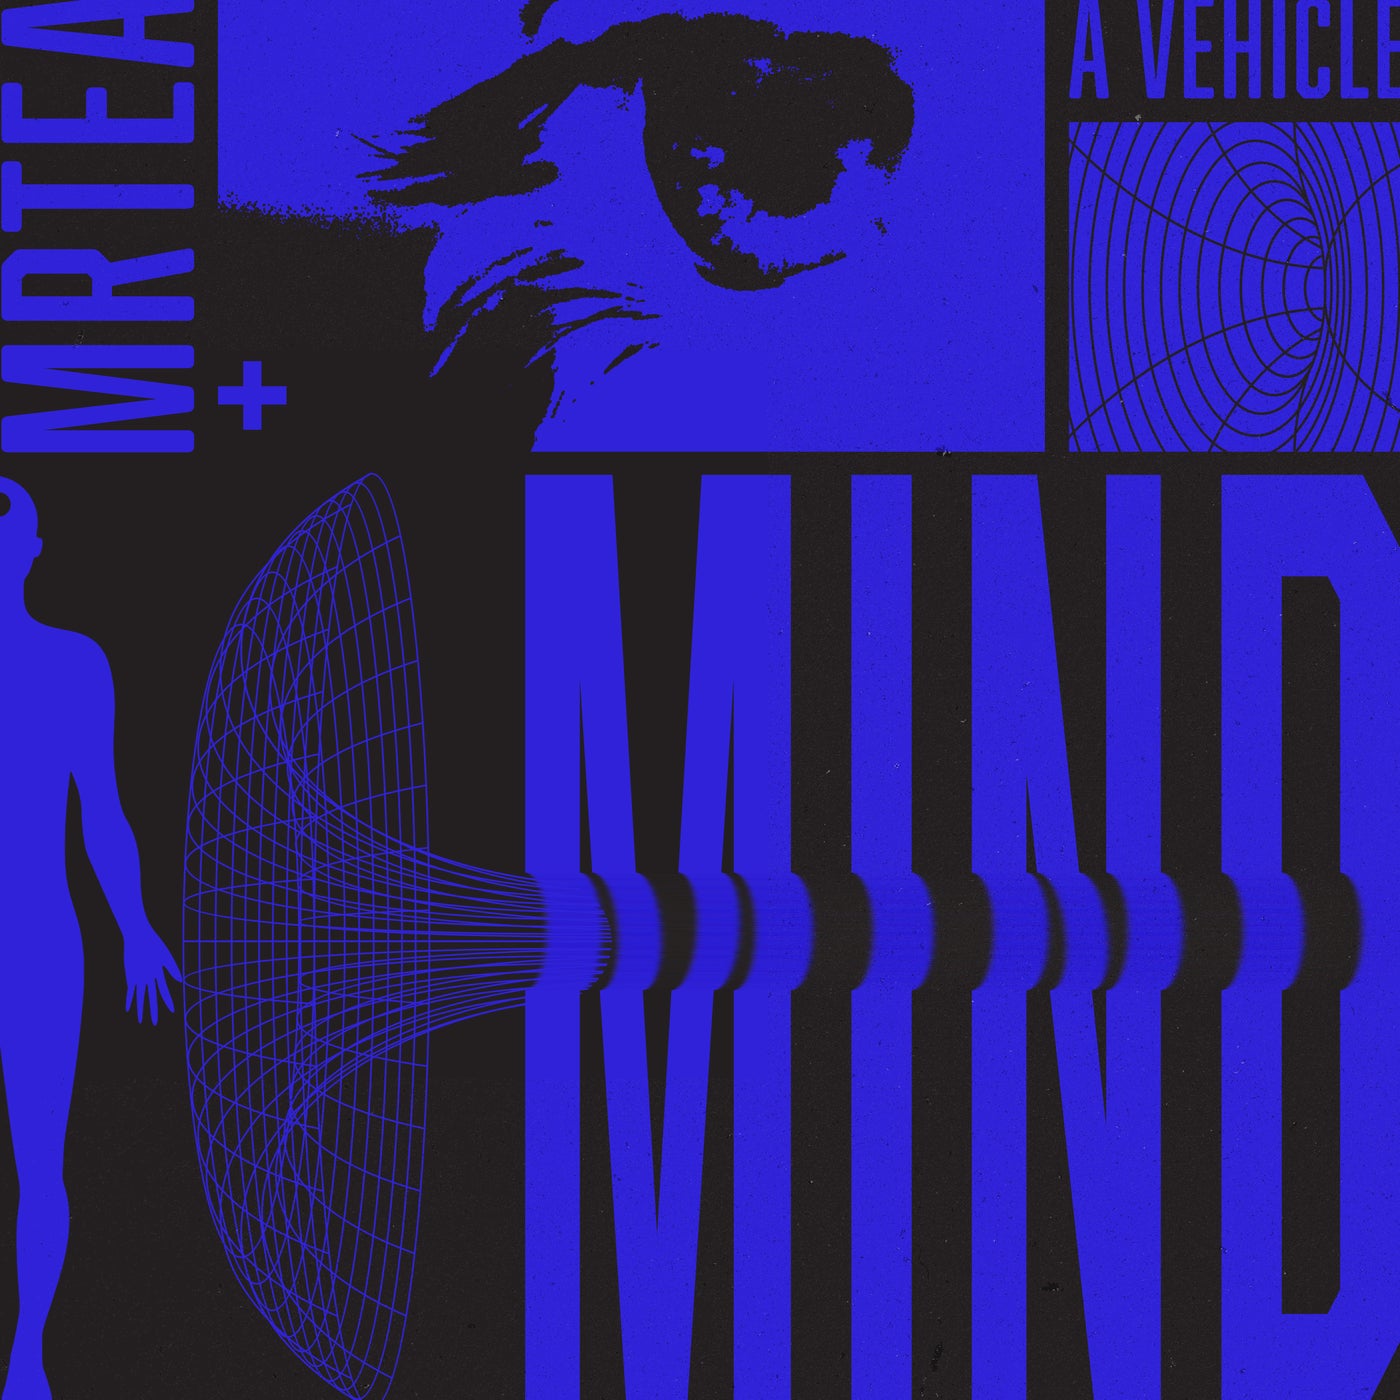 image cover: Mr Tea, Wonder - A Vehicle Mind / PAPD318